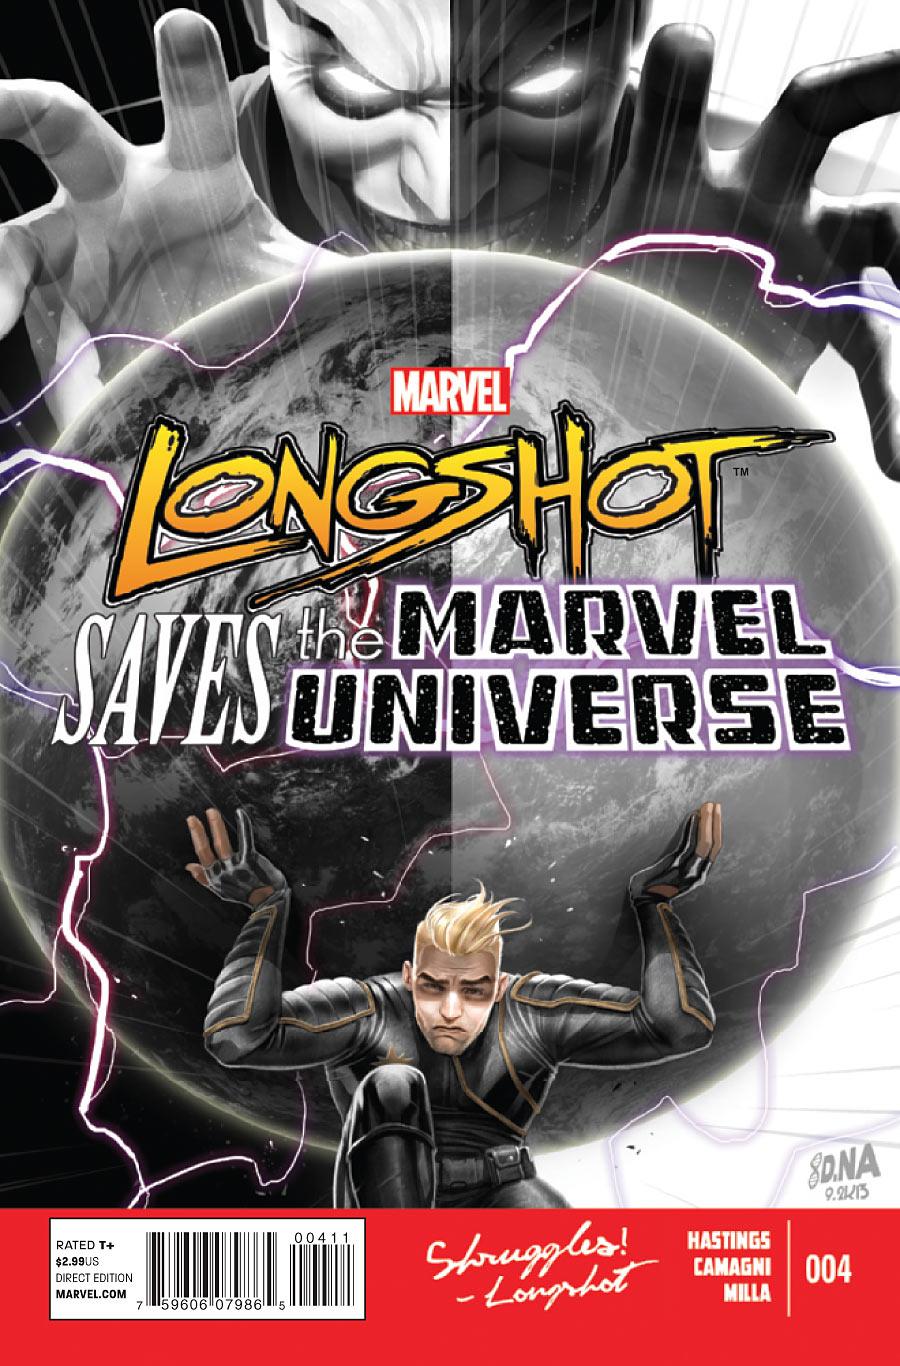 Longshot Saves the Marvel Universe Vol. 1 #4